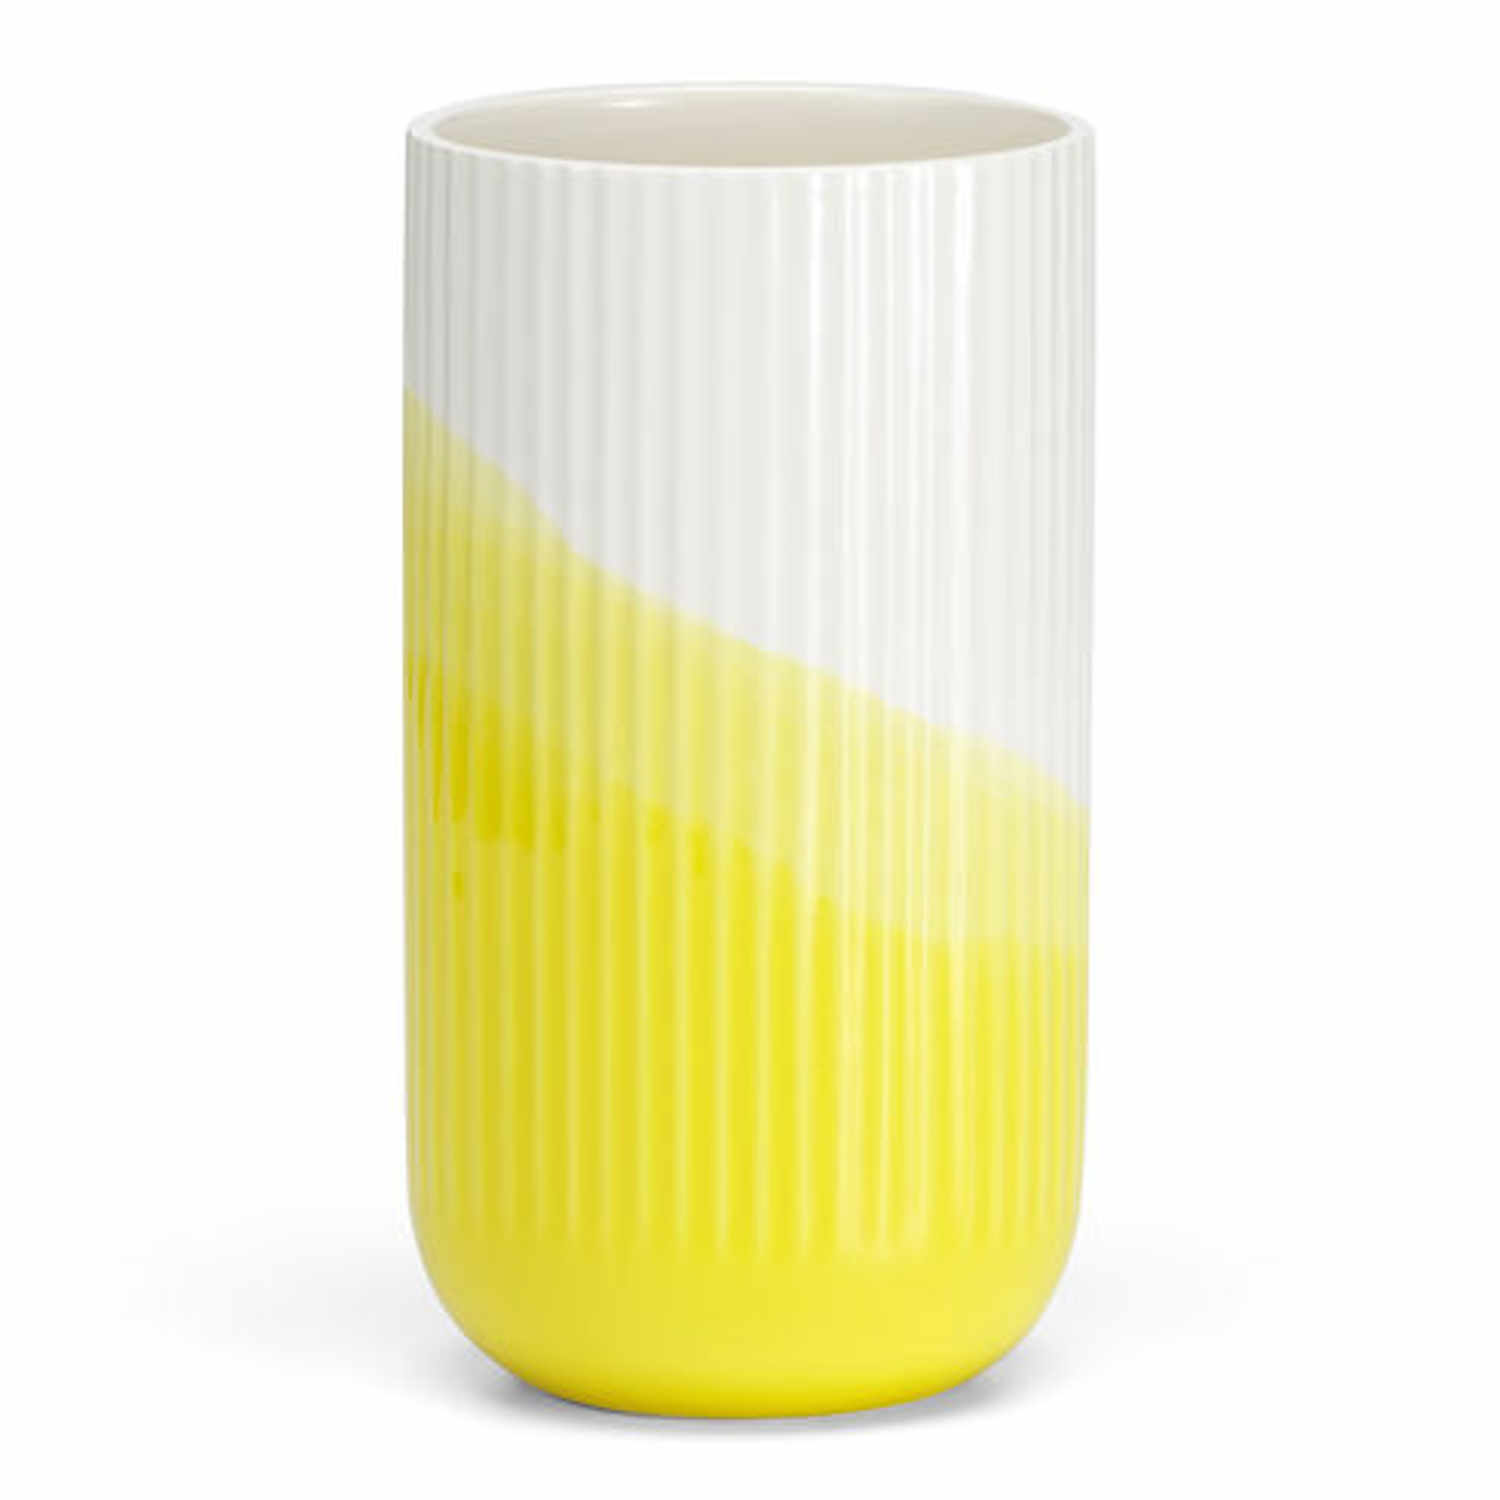 Herringbone Vessels gerillt Vase, Farbe gelb von Vitra